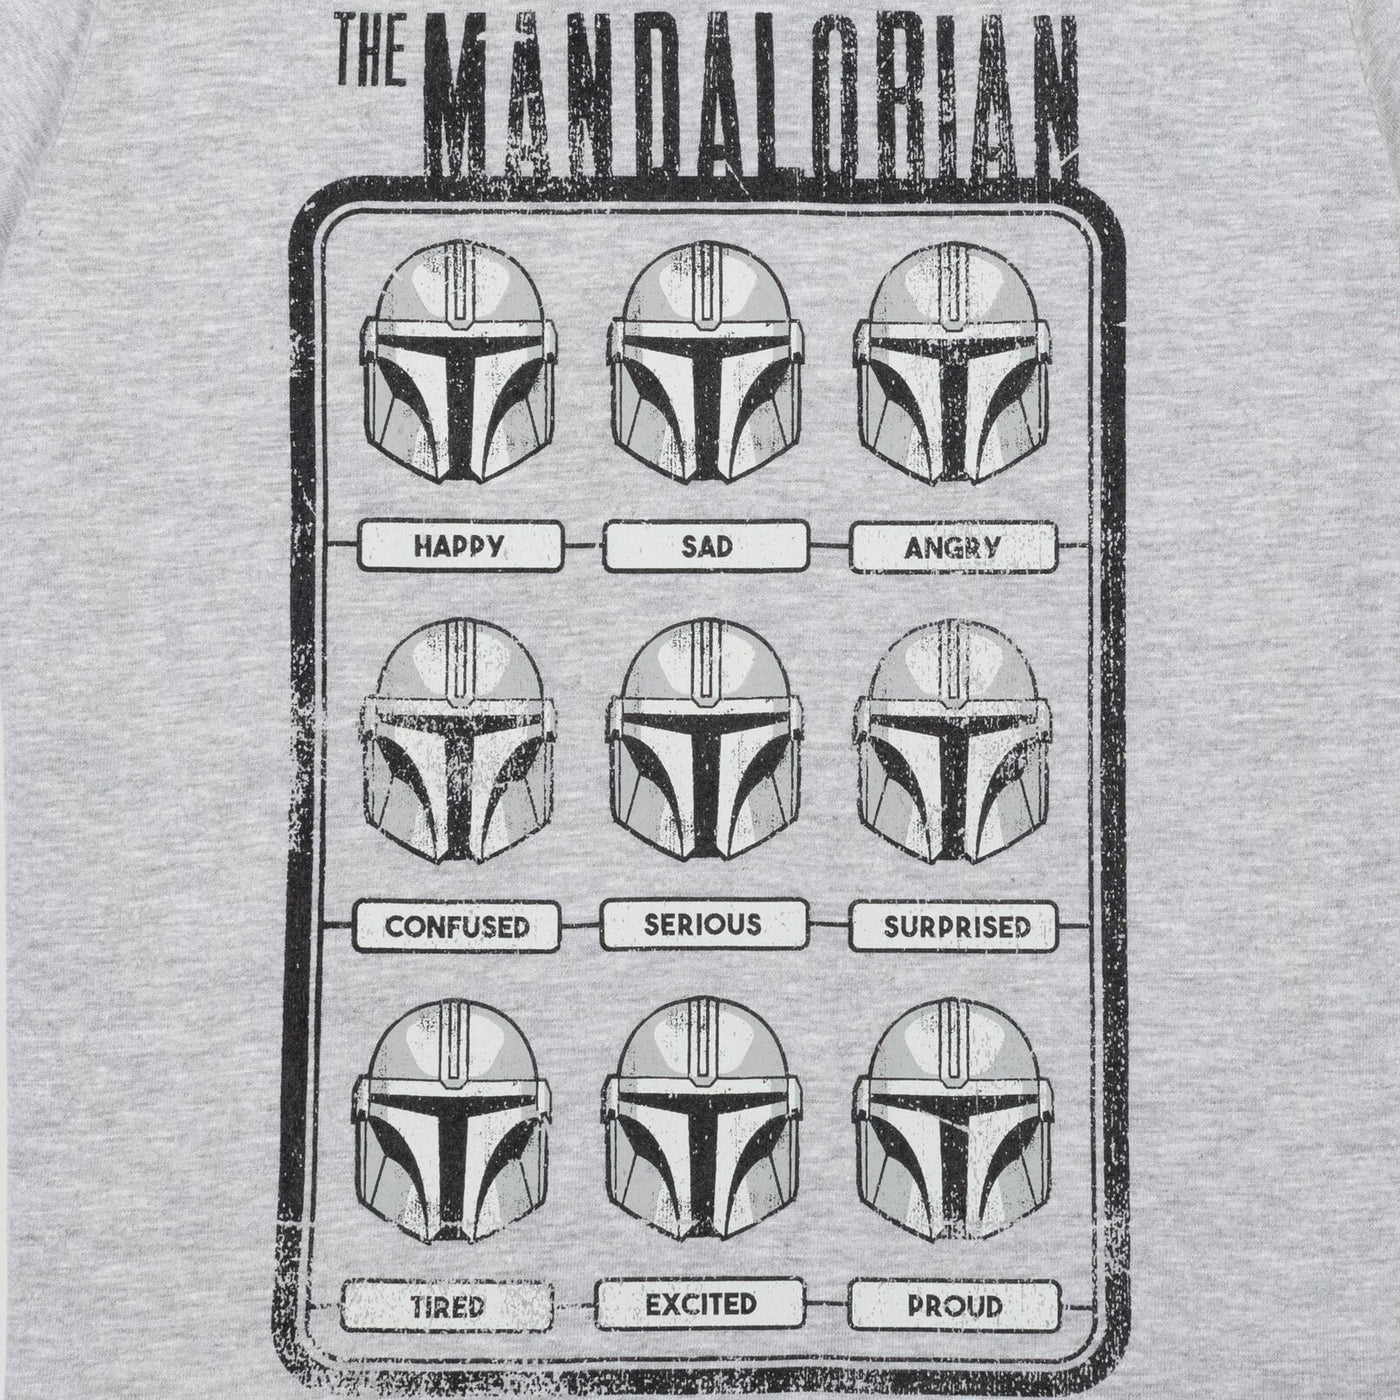 Star Wars The Mandalorian Baby Yoda 3 Pack T-Shirts